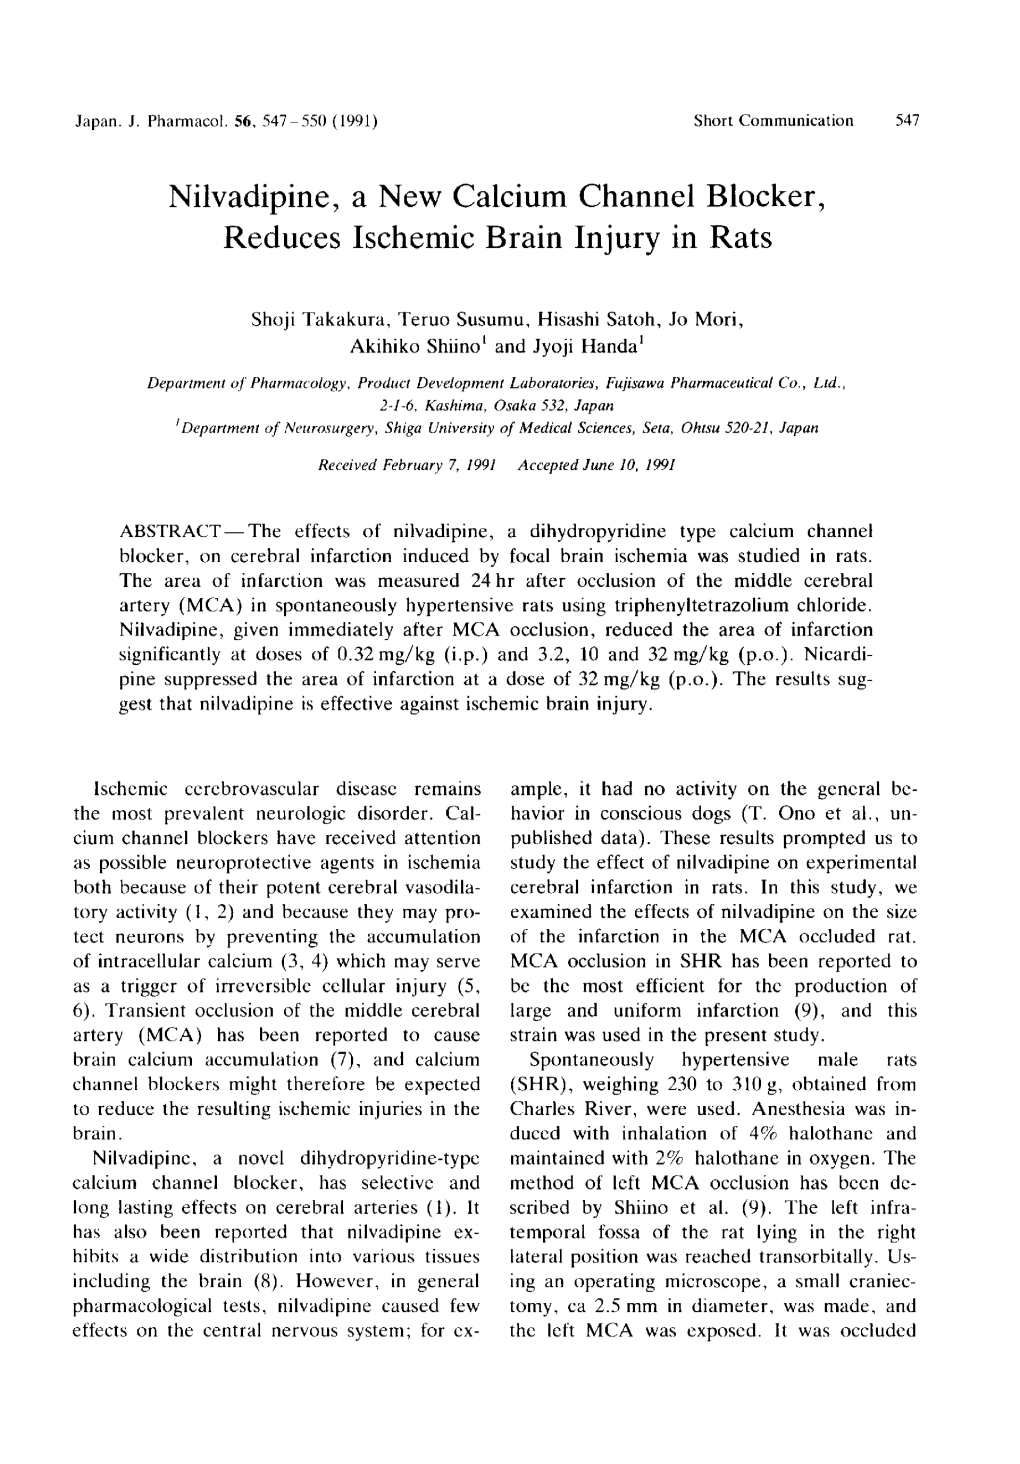 Reduces Ischemic Brain Injury in Rats